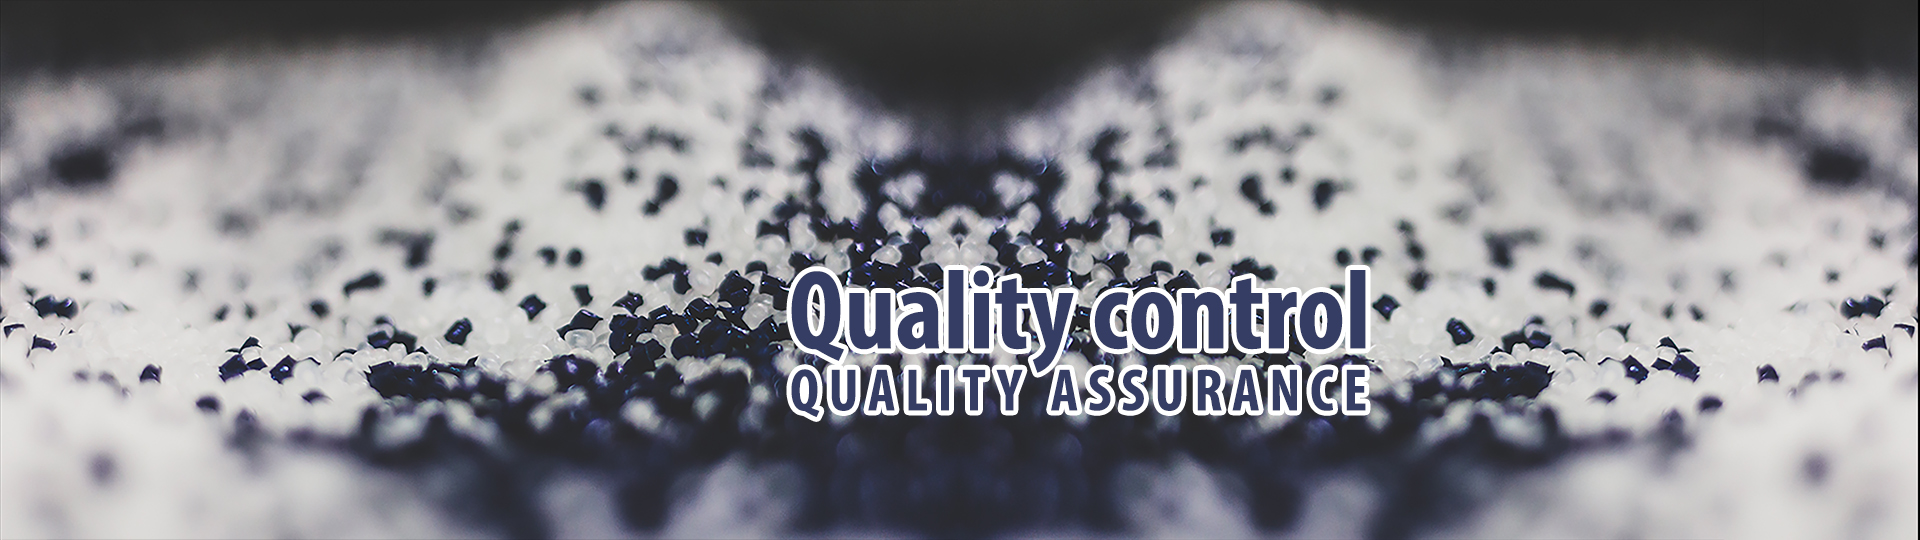 qualitycontrolqualityassurance12635924416710189837